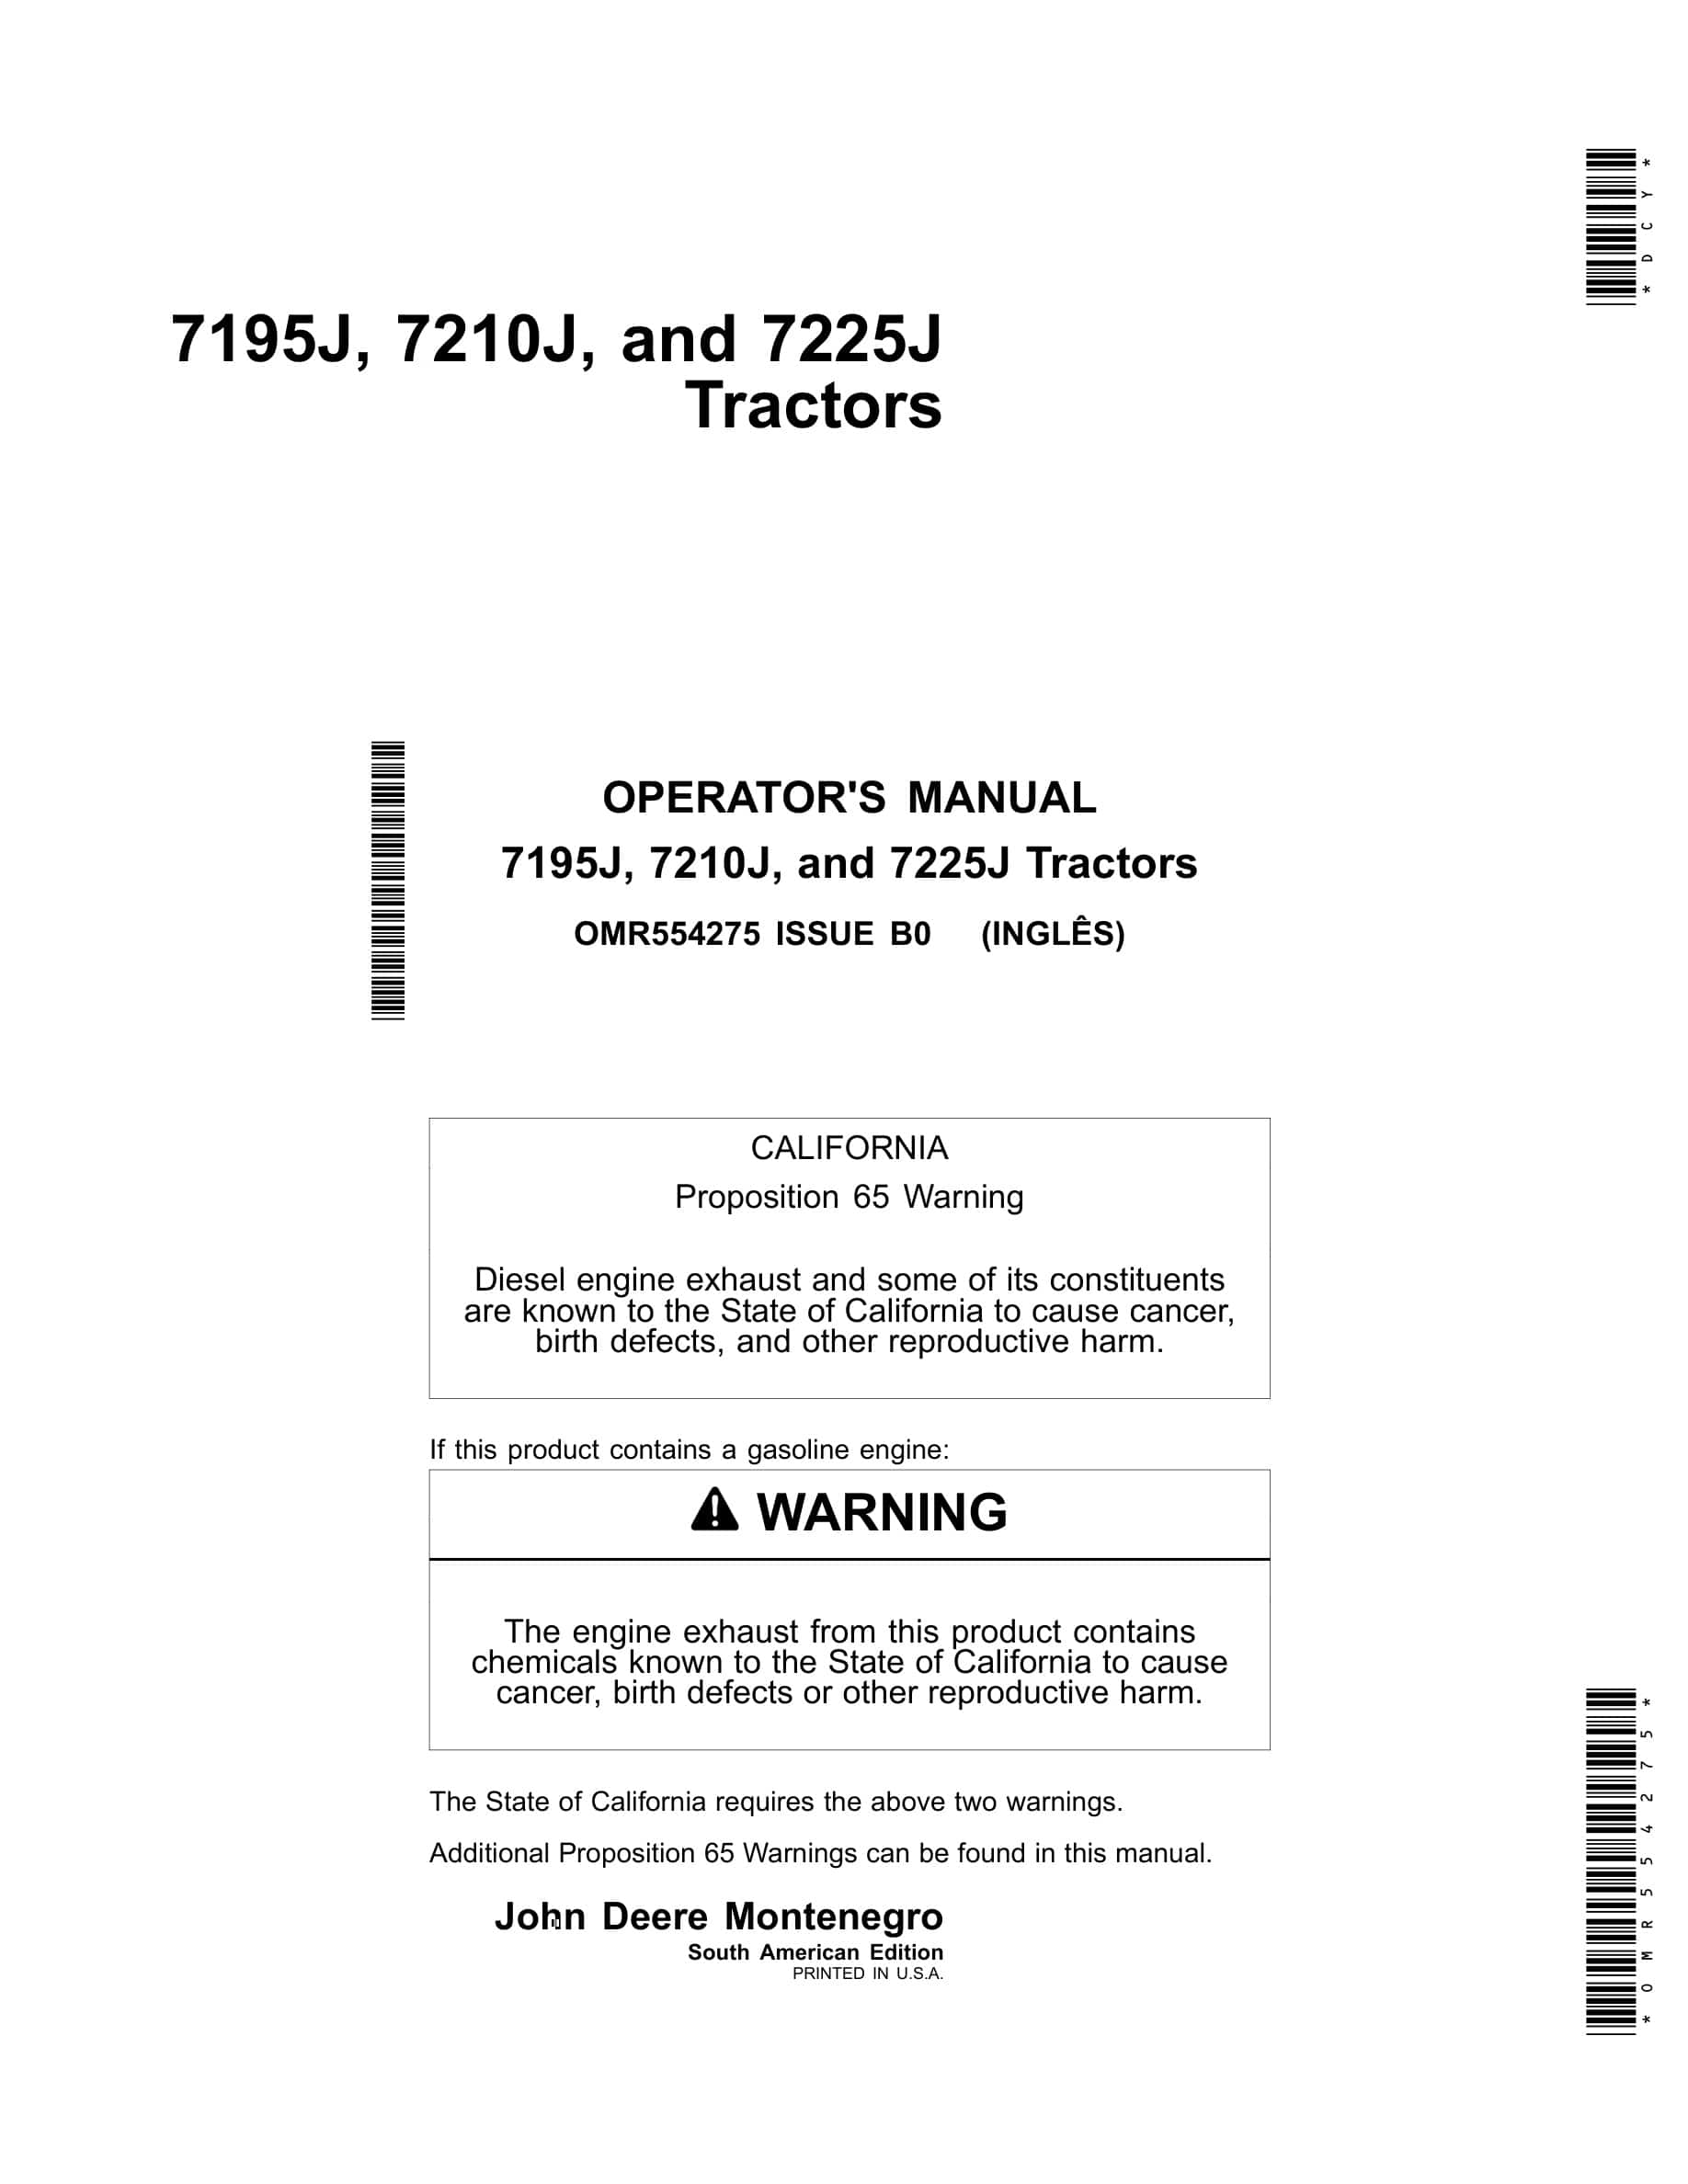 John Deere 7195j, 7210j, And 7225j Tractors Operator Manuals OMR554275-1